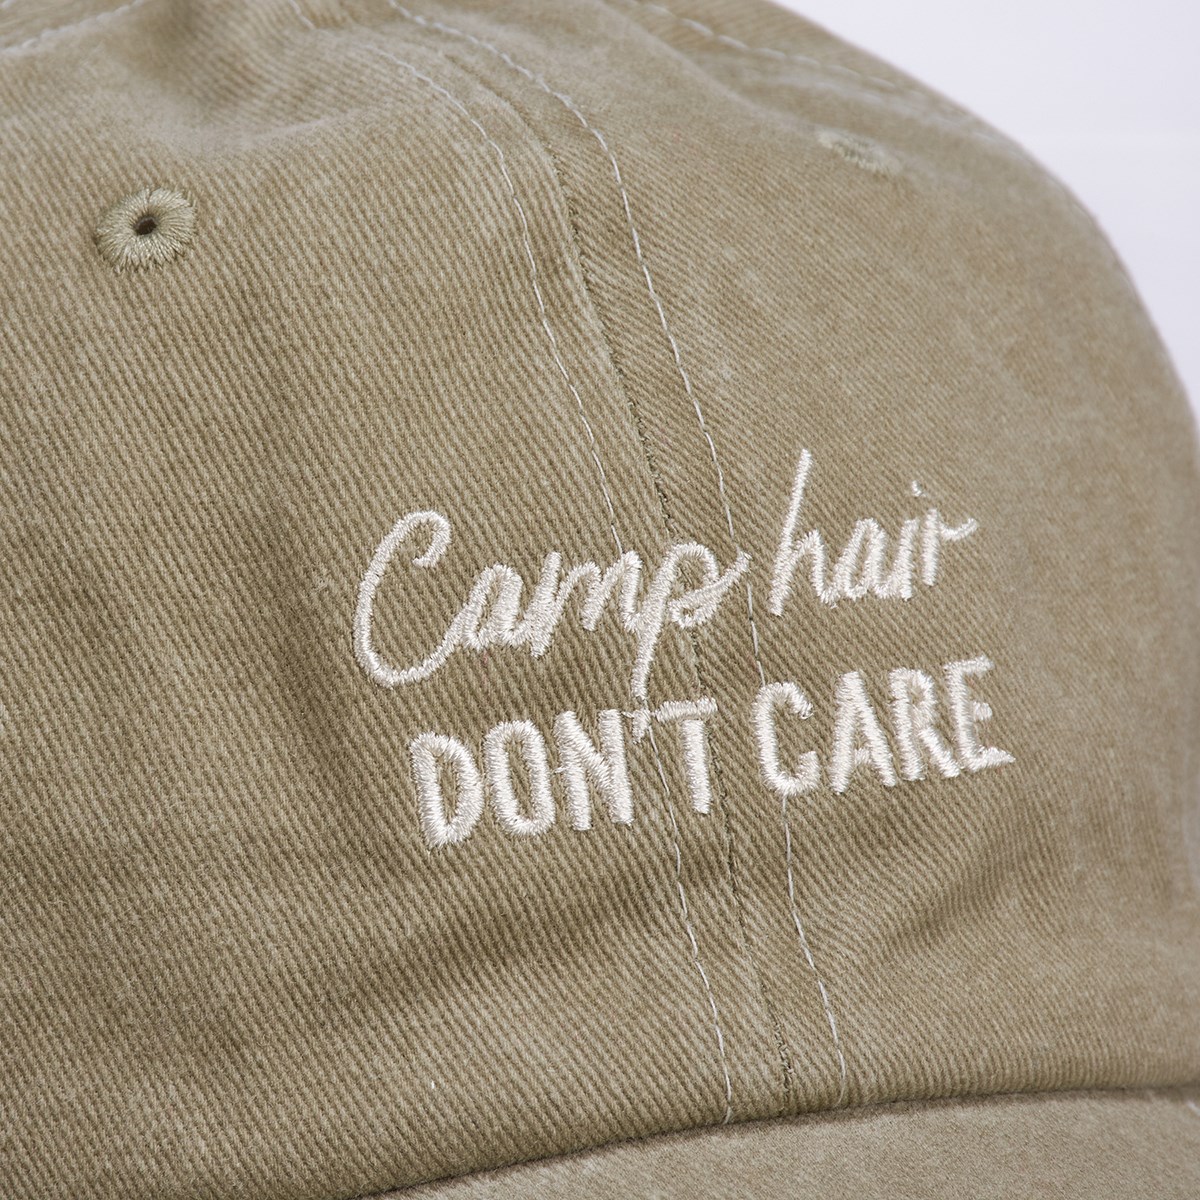 Camp Hair Don't Care Baseball Cap - Cotton, Metal